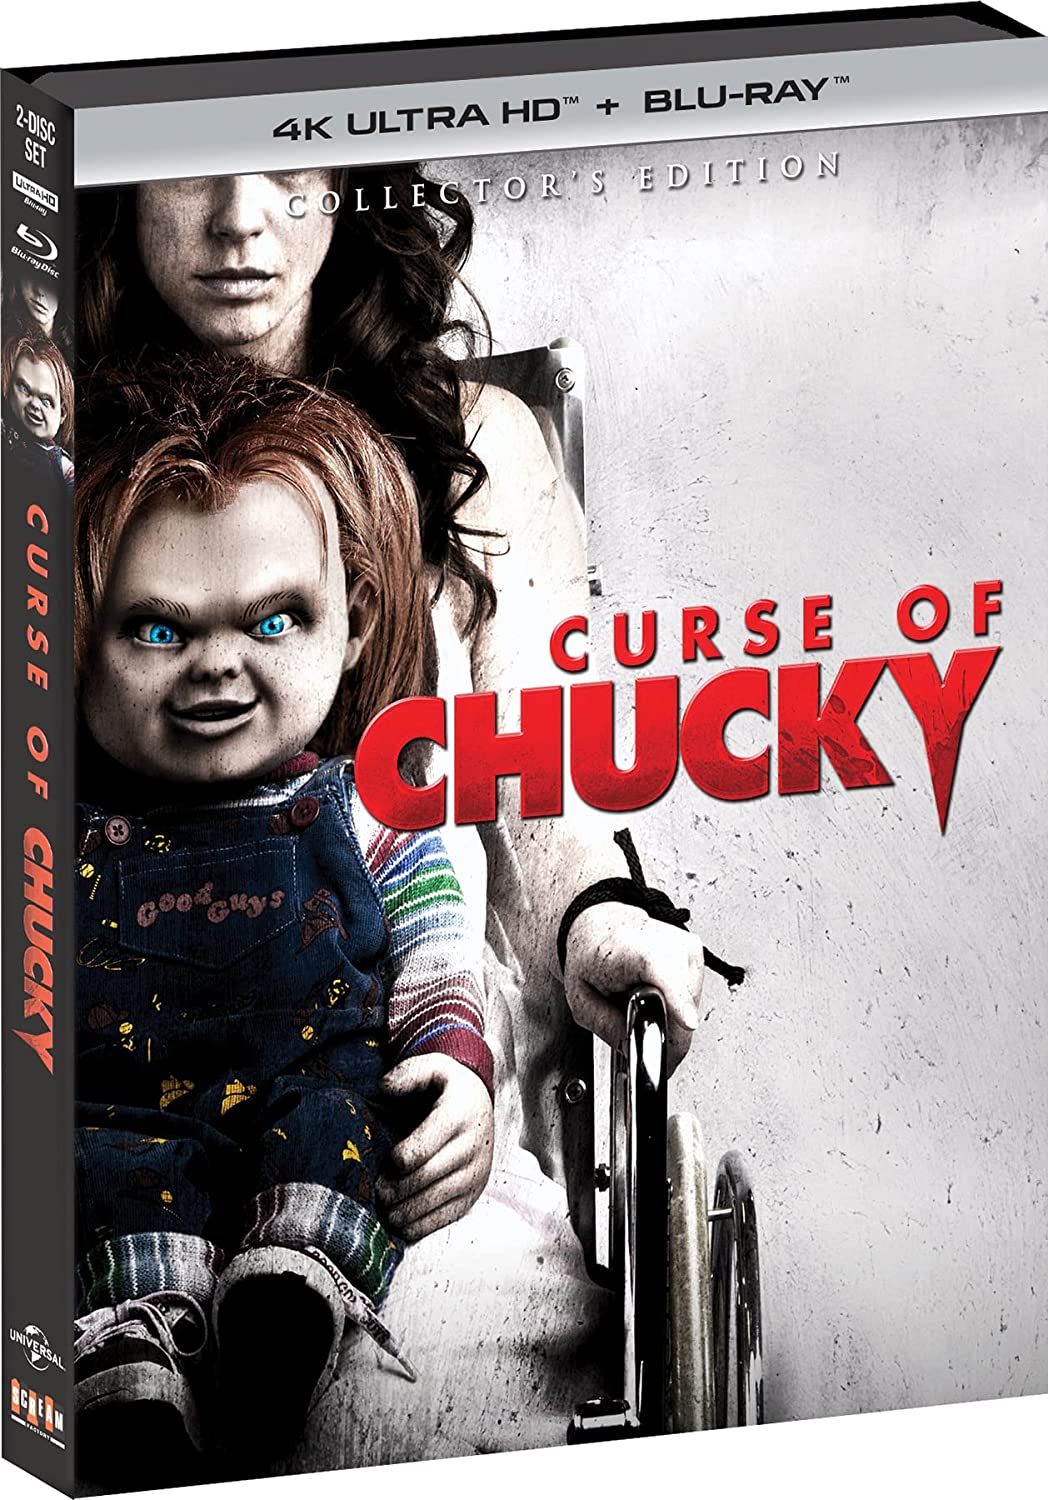 Curse of Chucky Scream Factory 4K UHD/Blu-Ray [NEW] [SLIPCOVER]